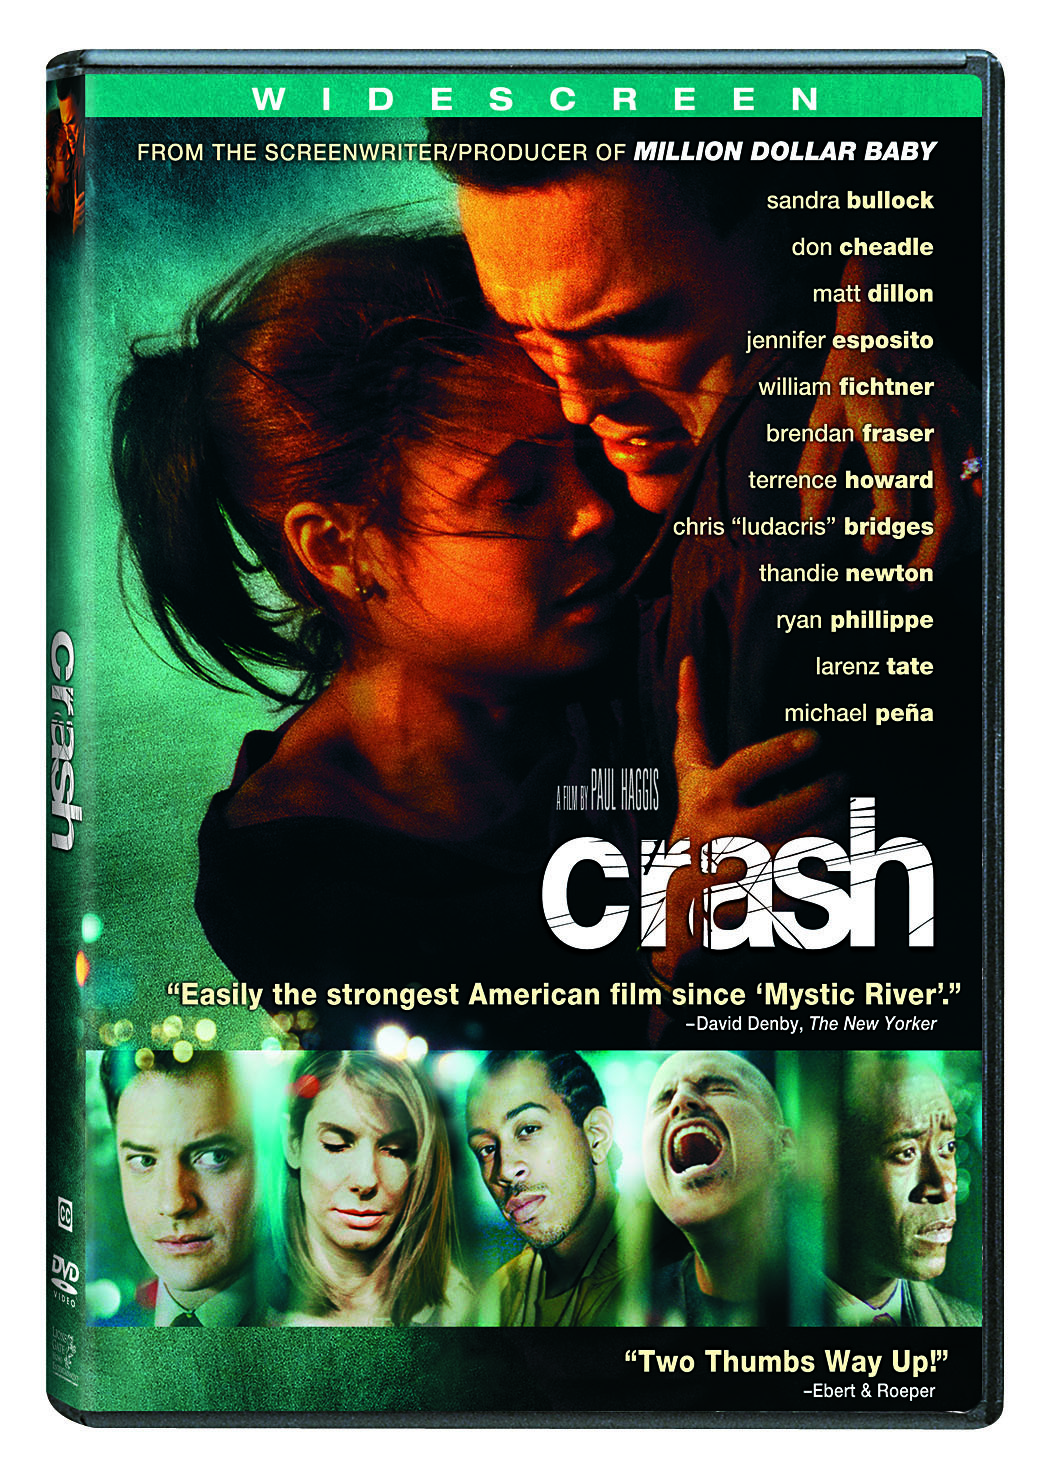 Crash (DVD Widescreen) - DVD [ 2004 ]  - Drama Movies On DVD - Movies On GRUV